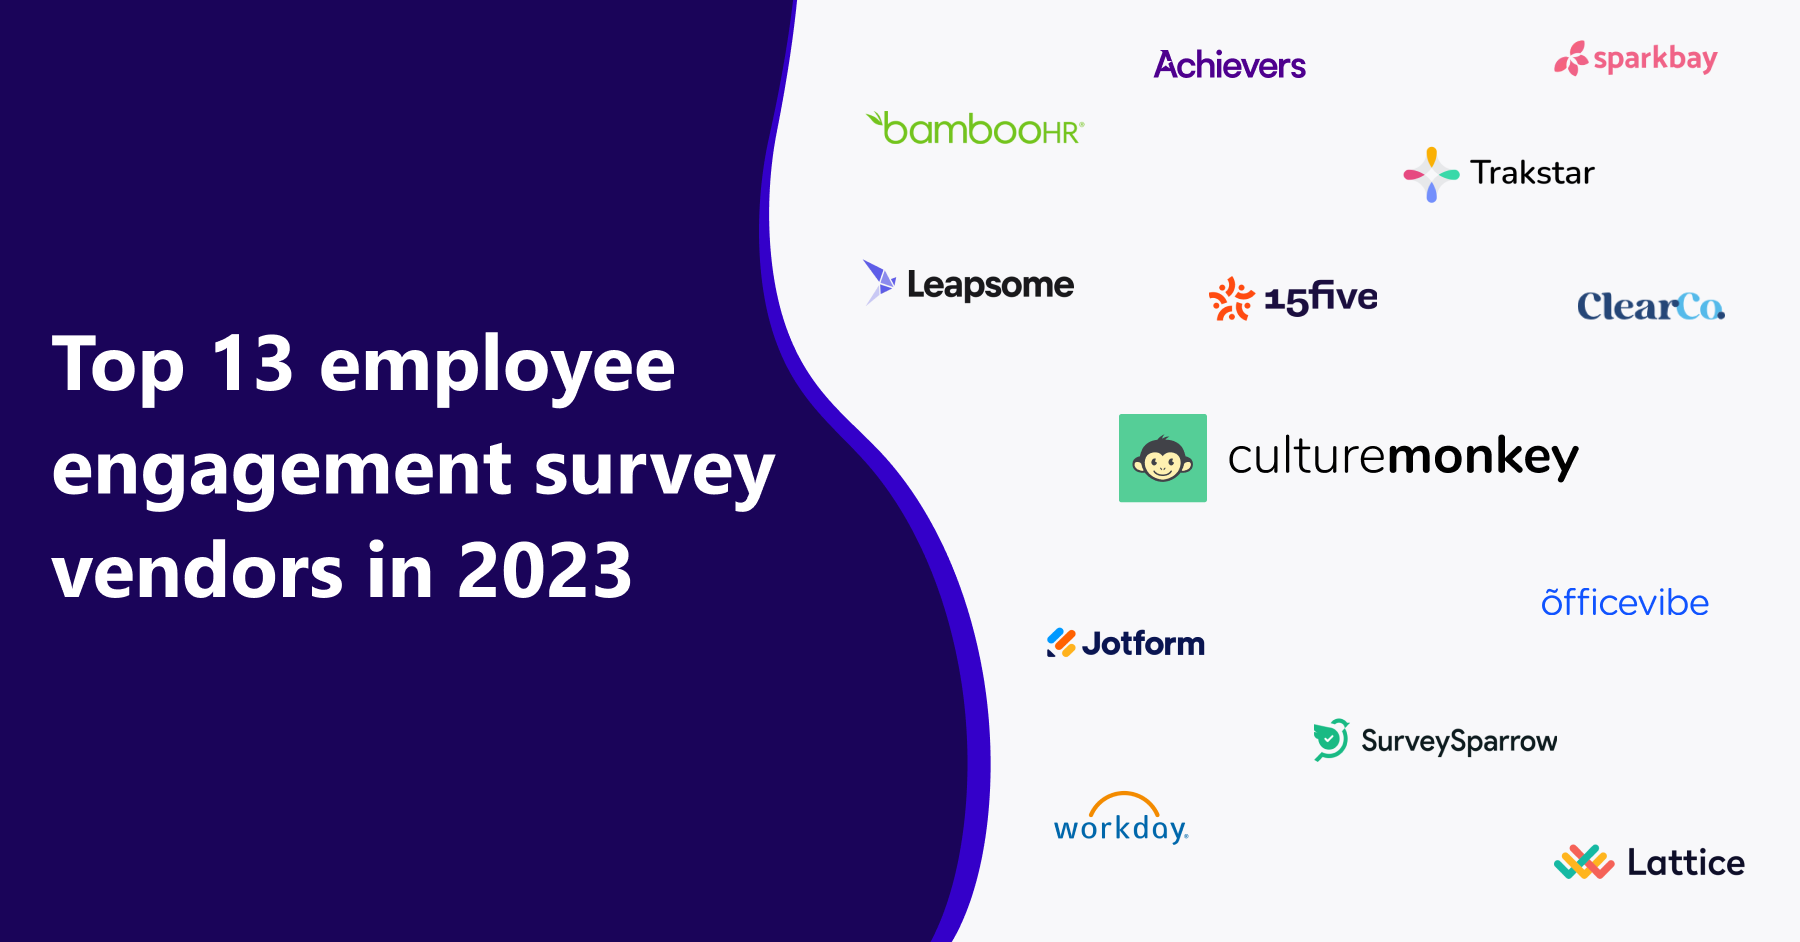 Top 13 employee engagement survey vendors in 2023